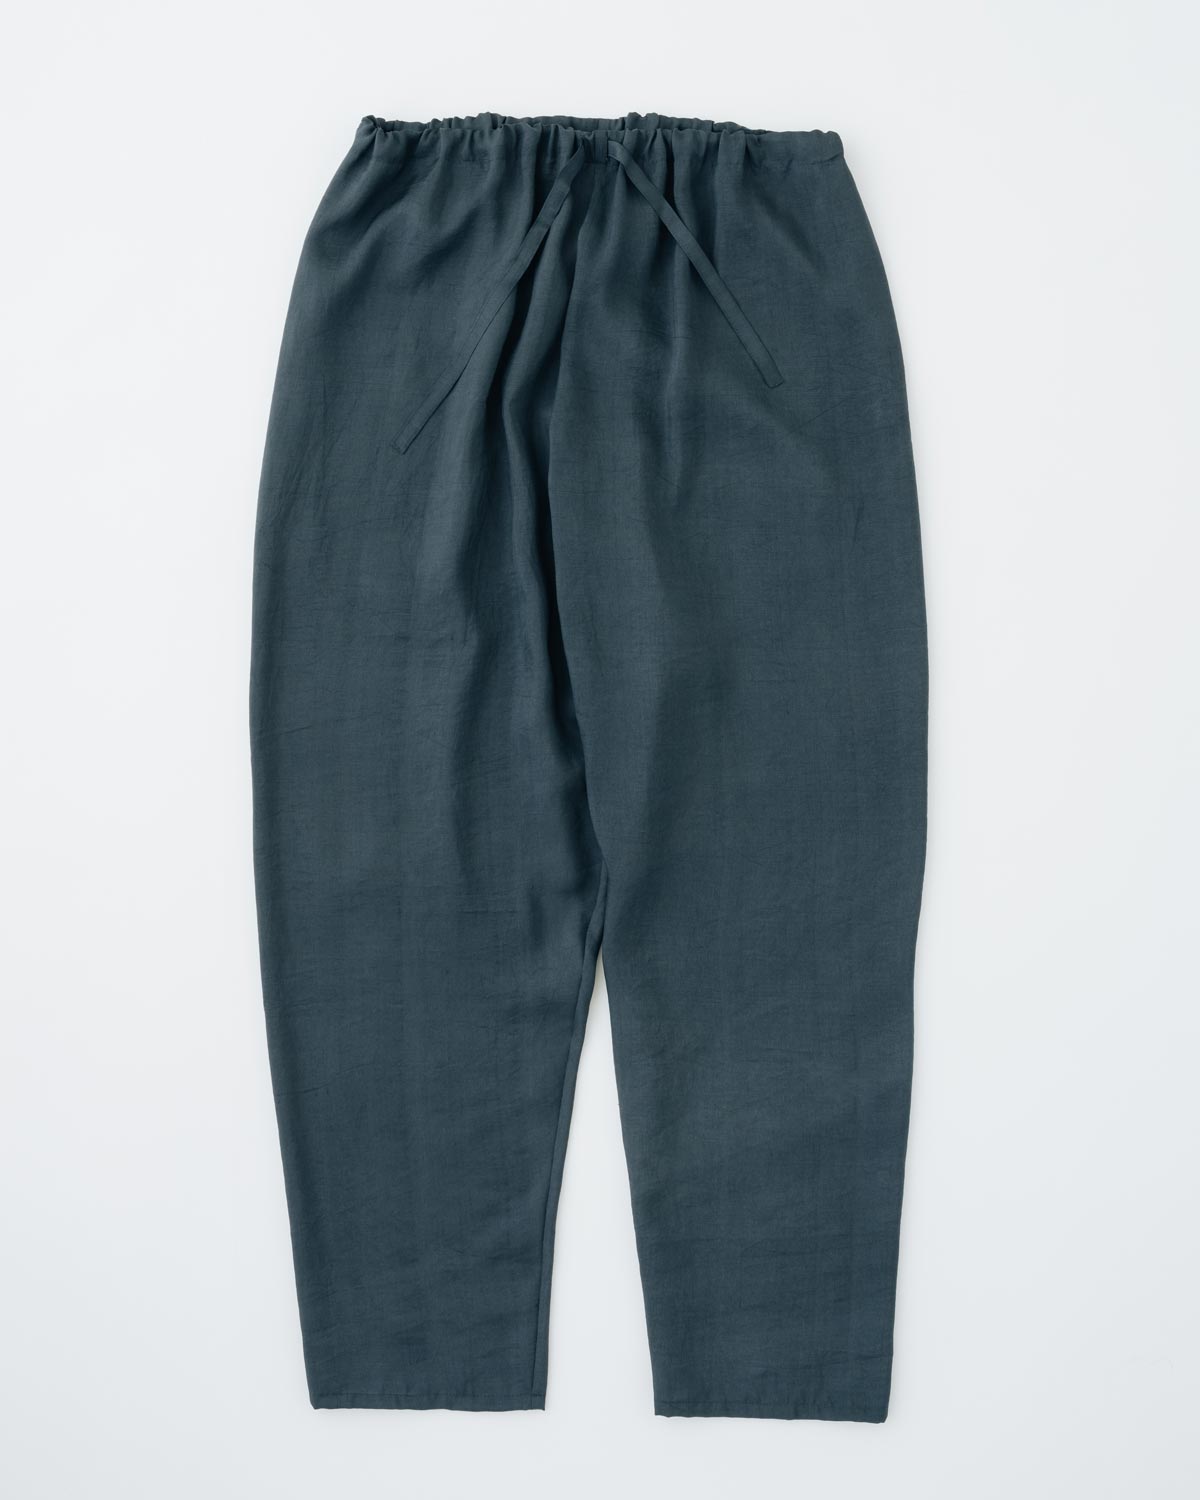 Silk Pants Charcoal gray